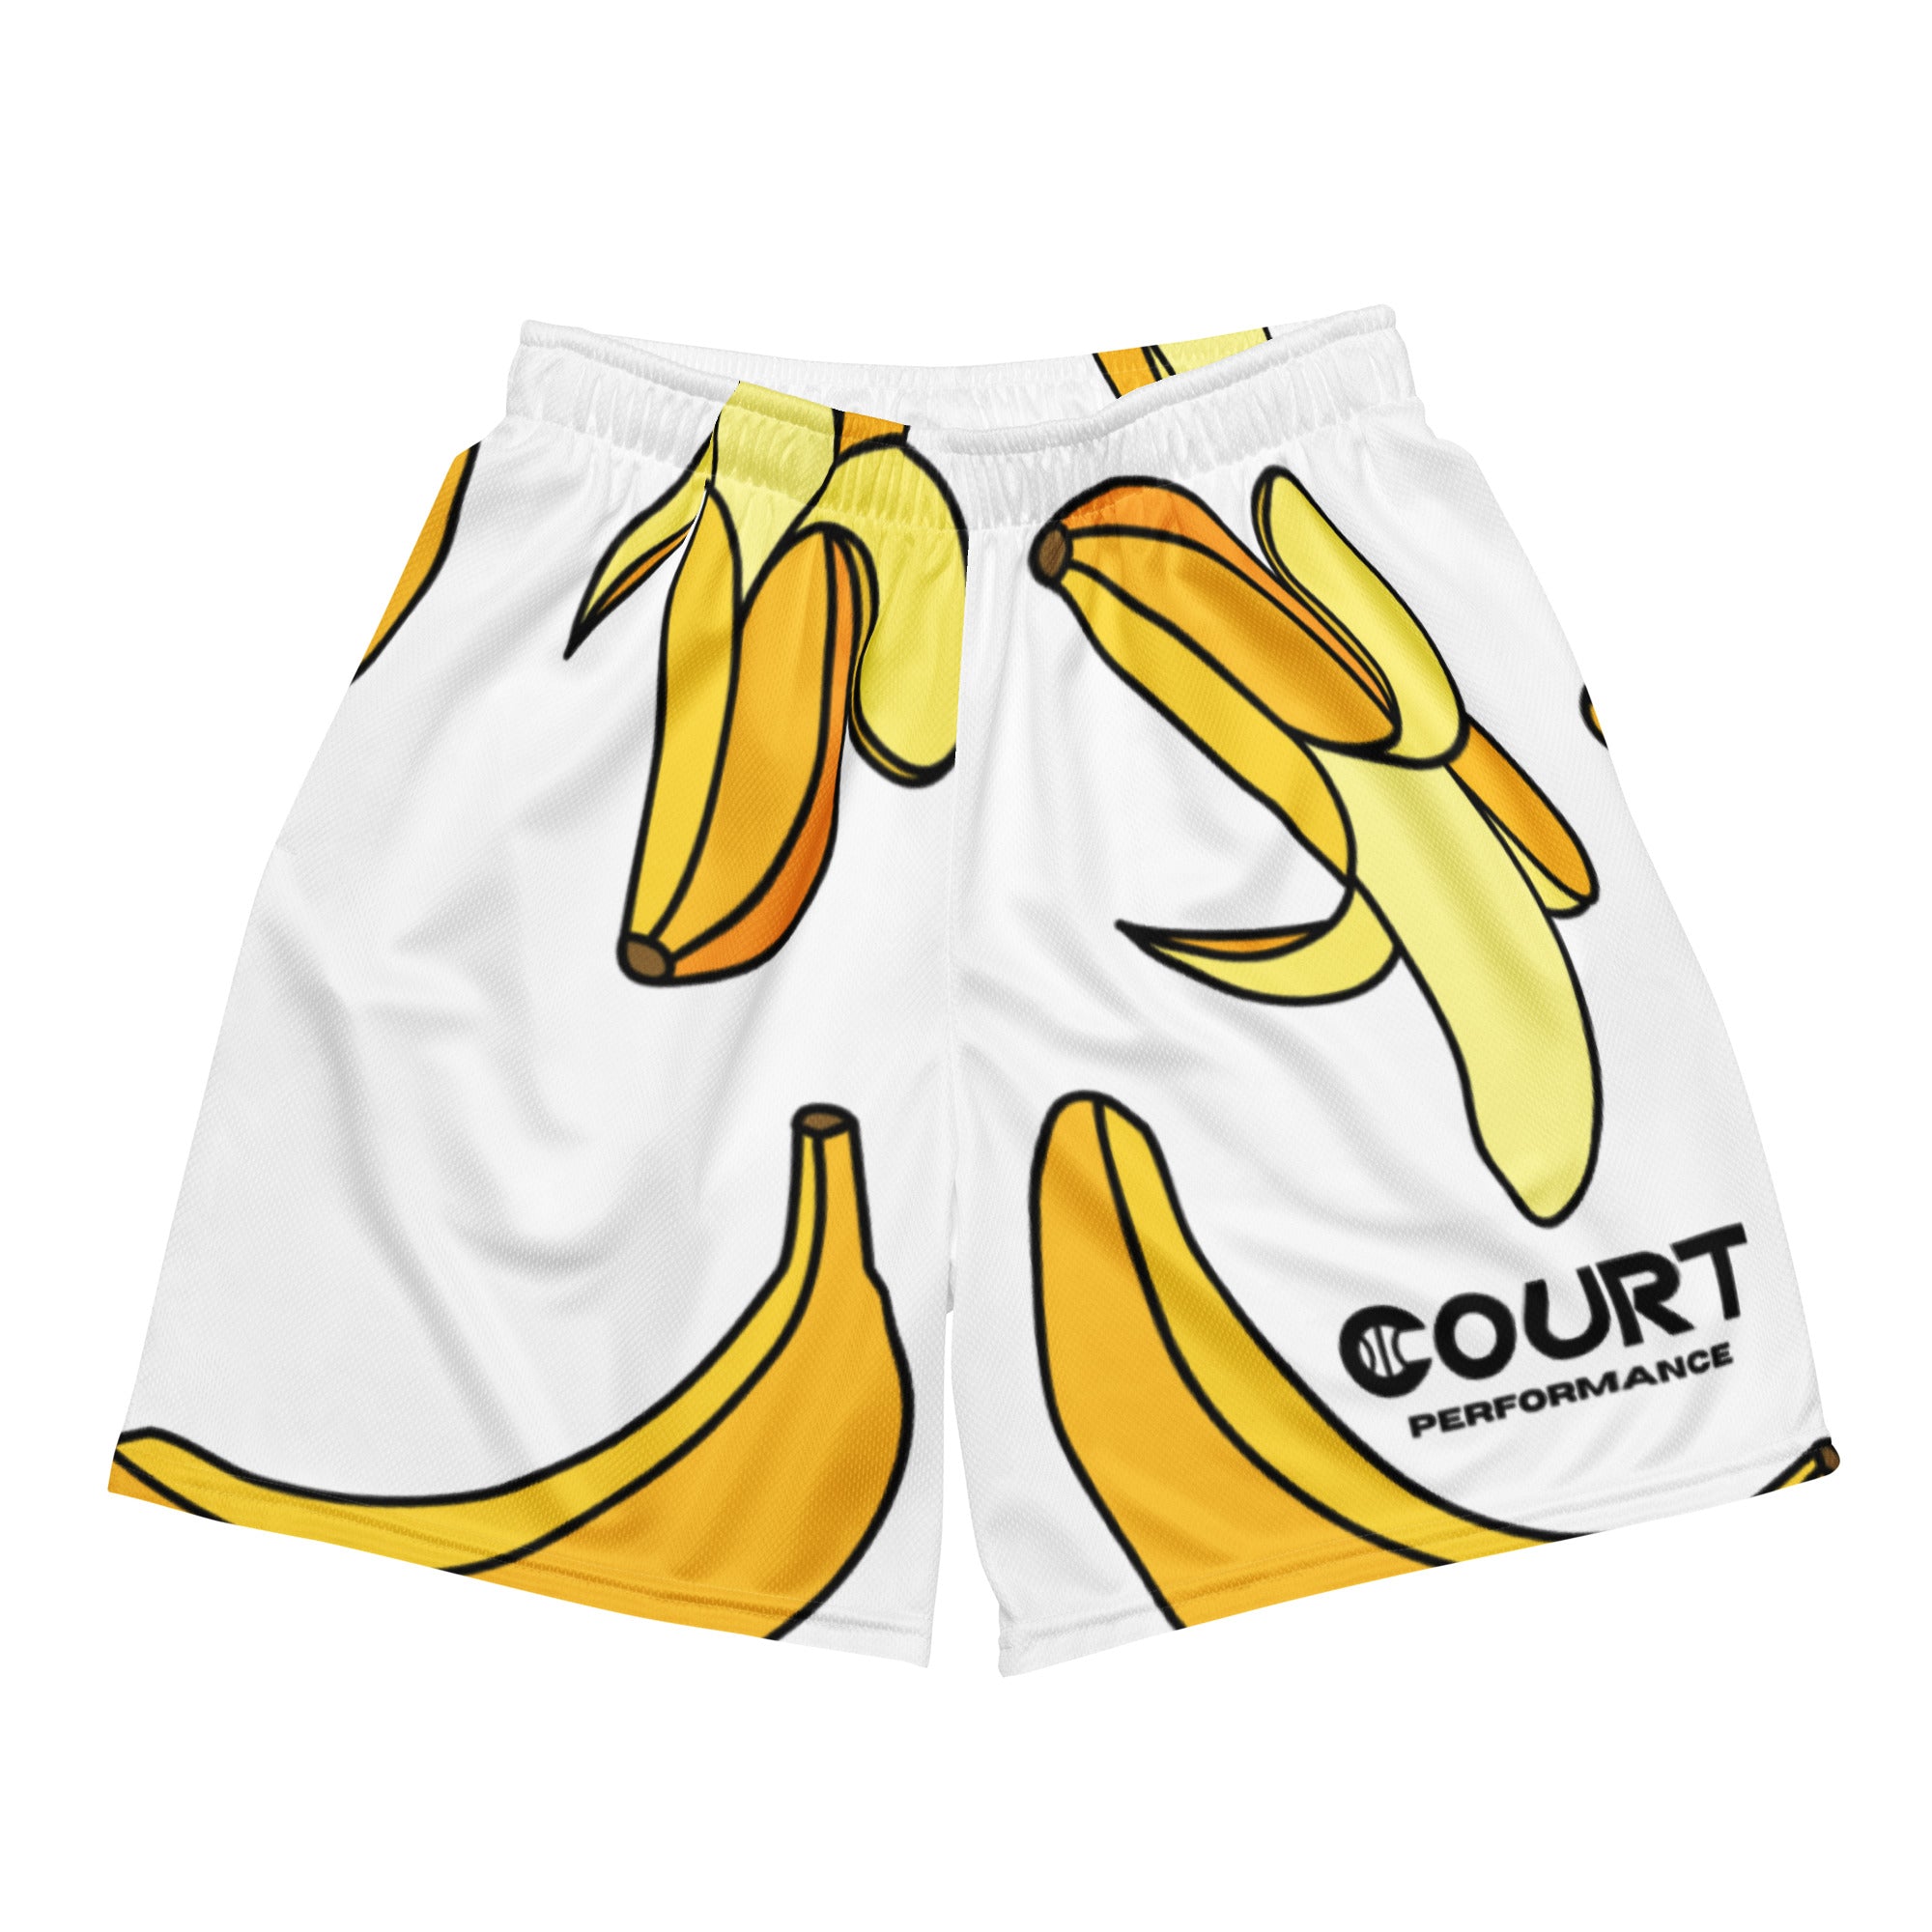 Pantaloncini court performance - bananas unisex